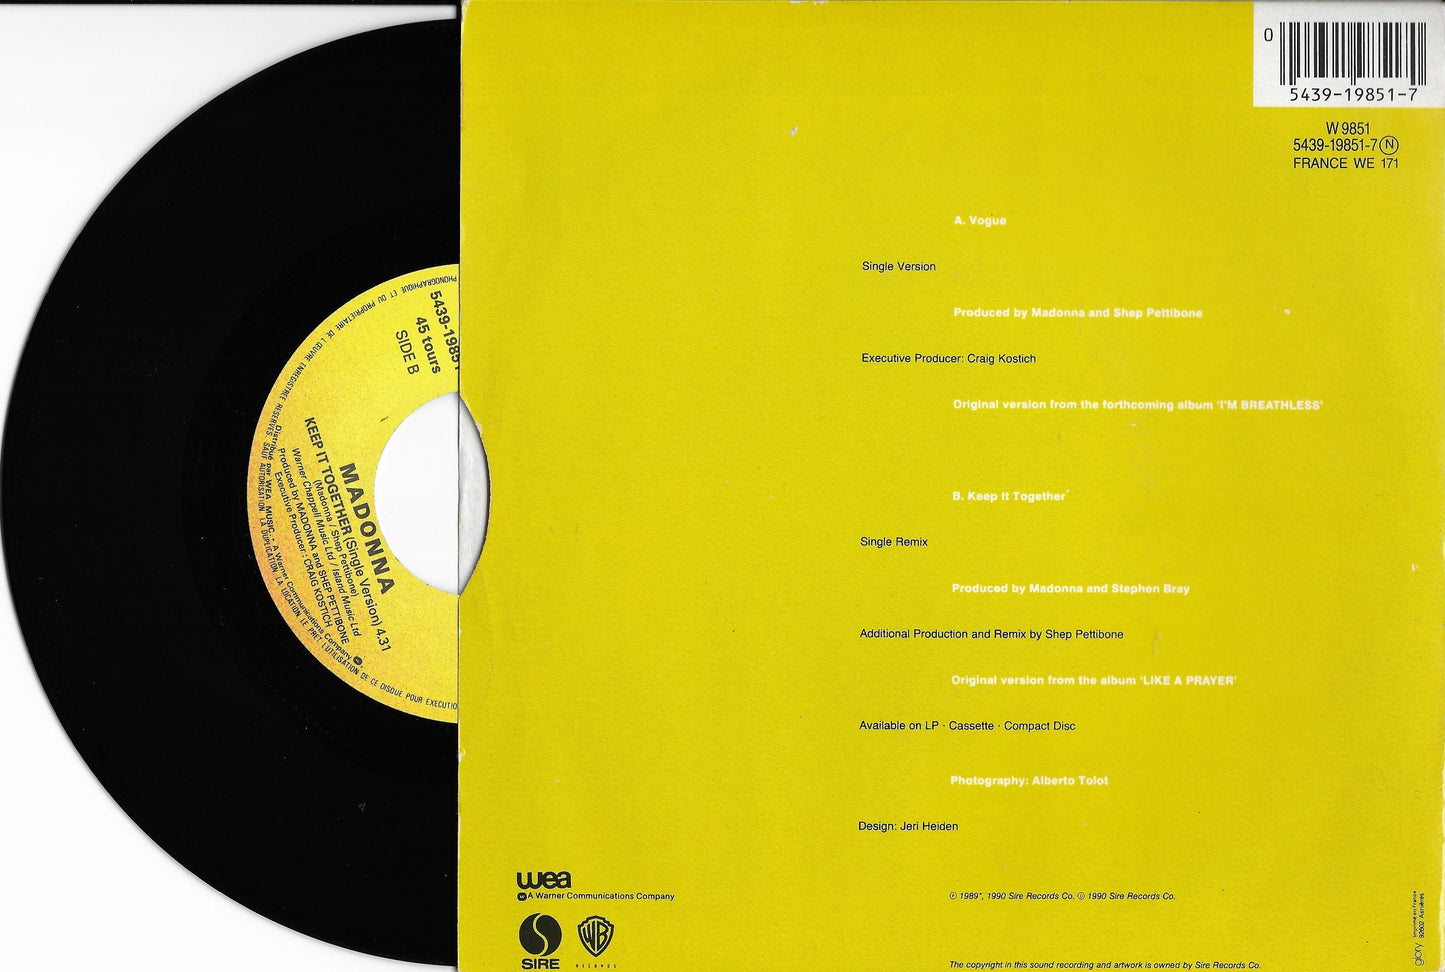 Disque Vinyle 45 tours Occasion - DE BLANC - Hush – digg'O'vinyl